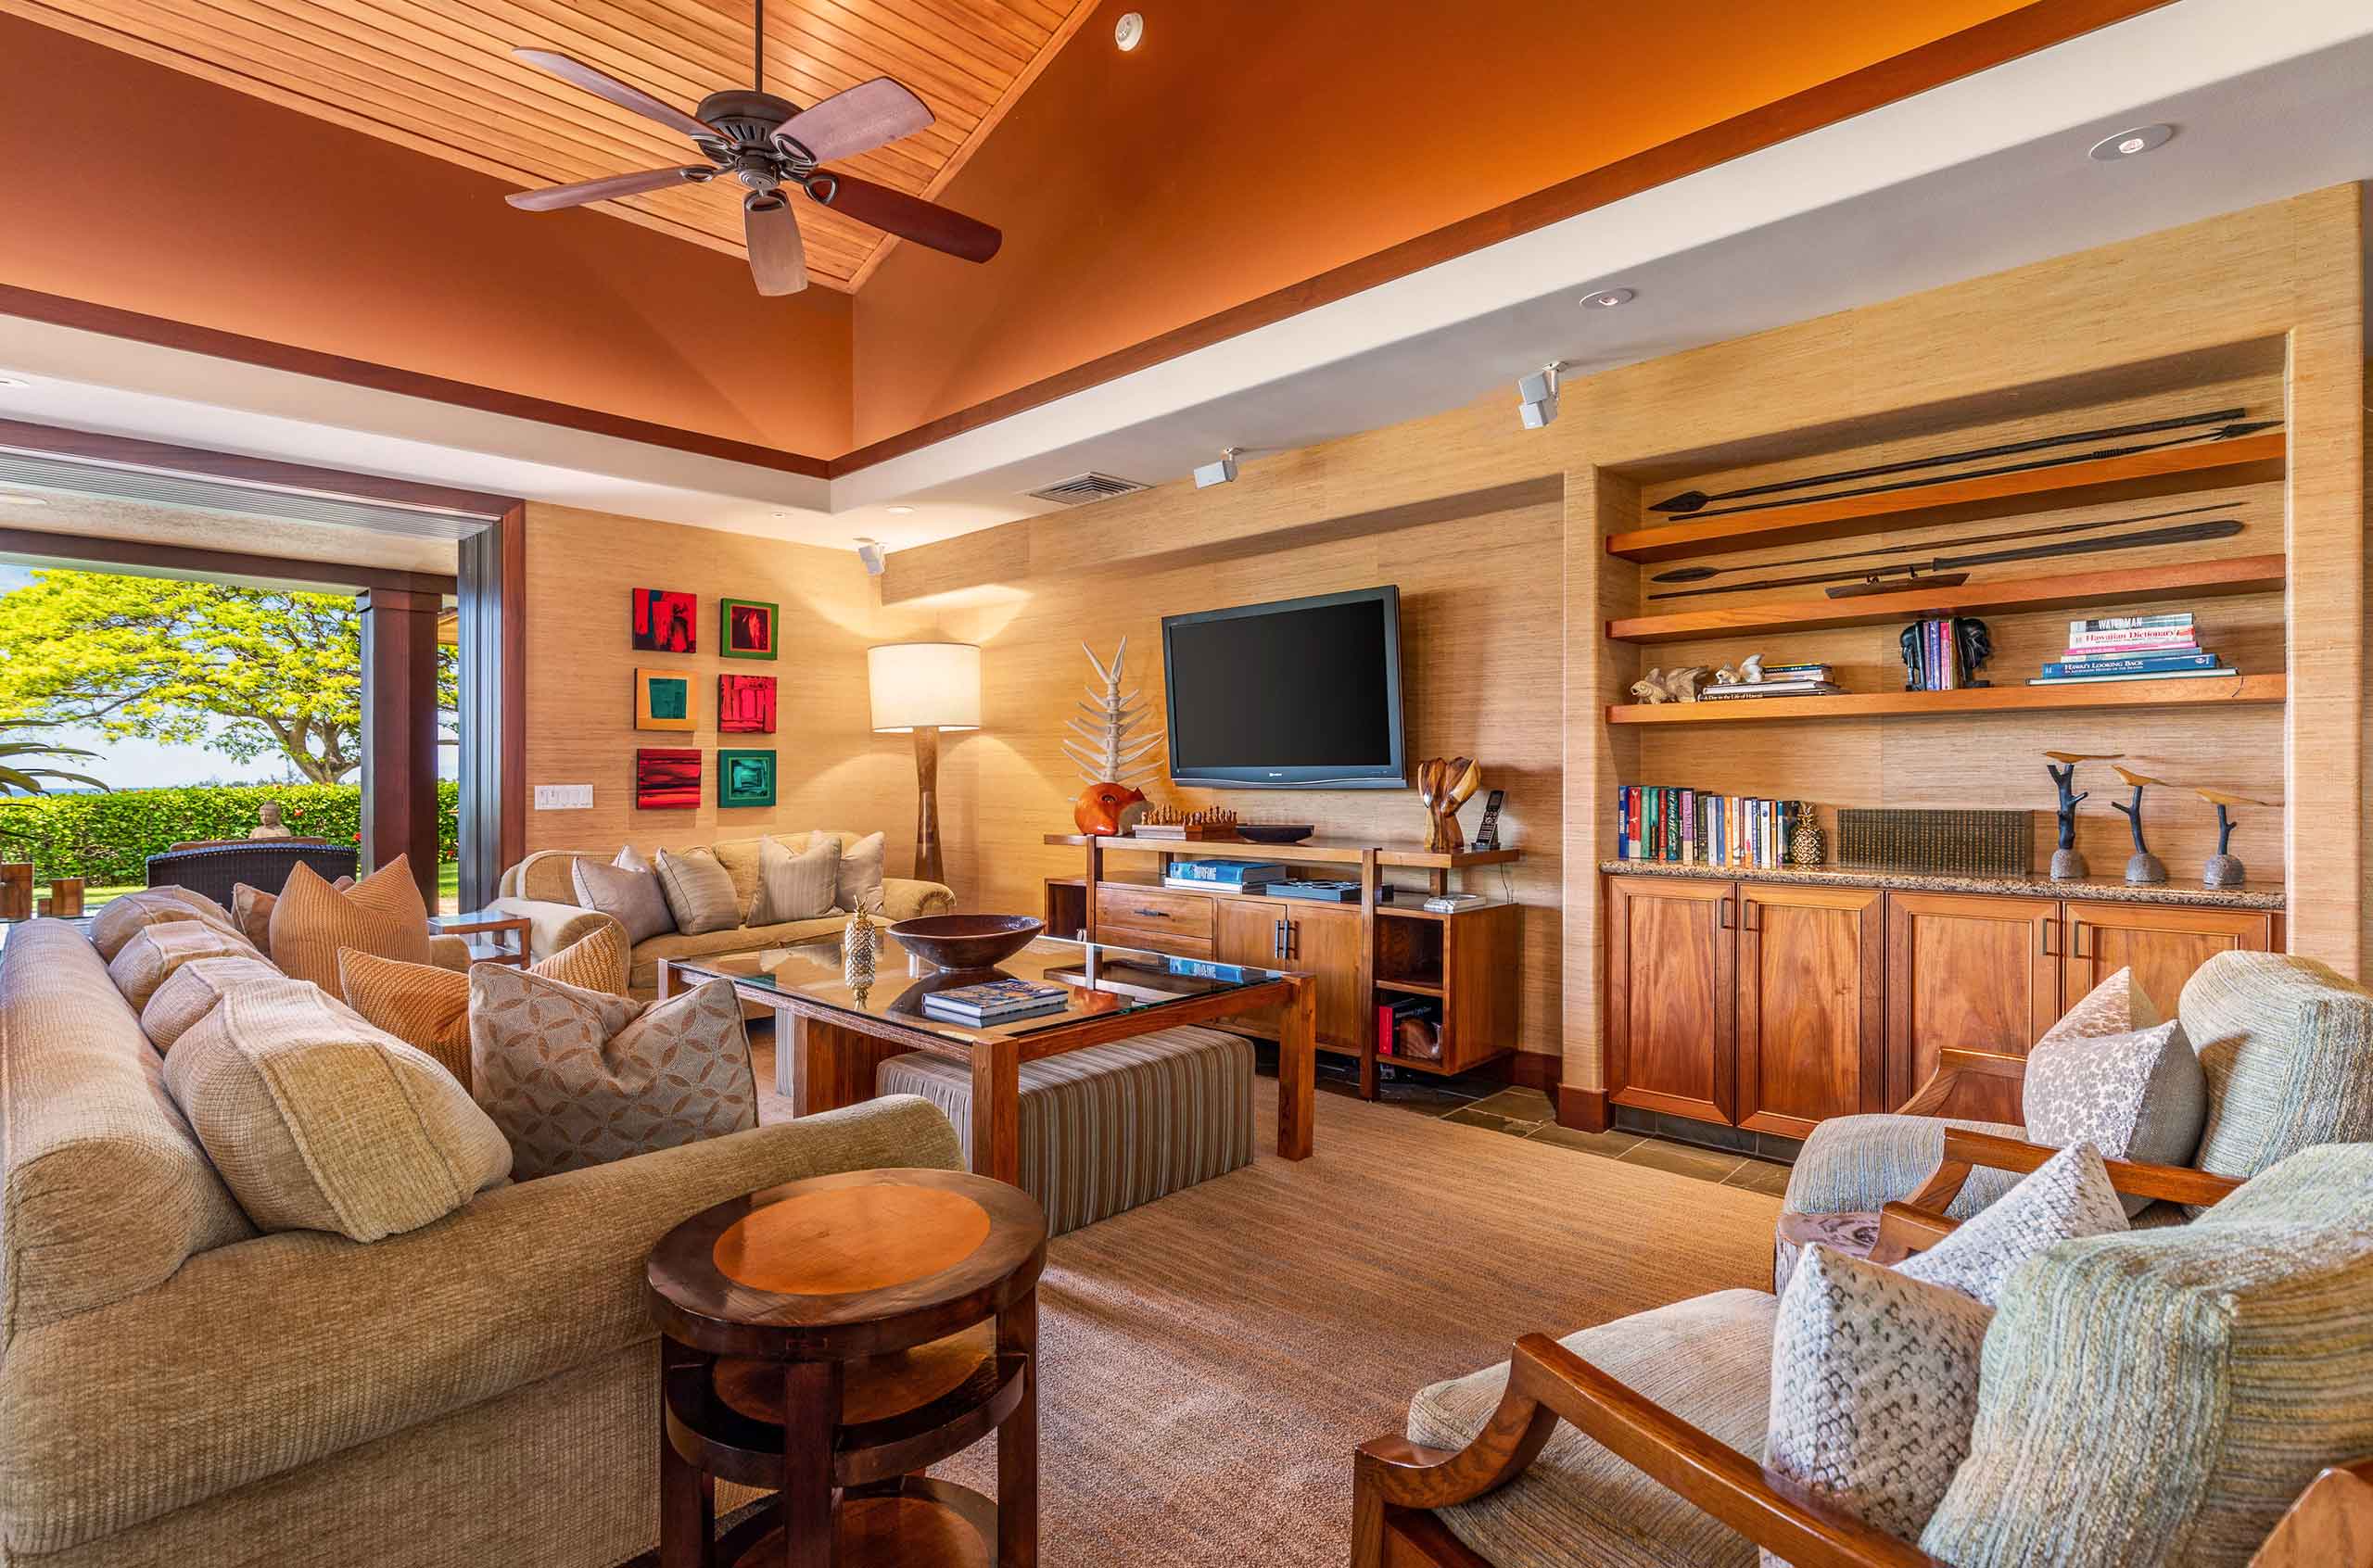 Spacious living room of a Big Island Cuvée luxury villa with Koa wood, sweeping ocean views and fresh air flowing through an open floor plan.